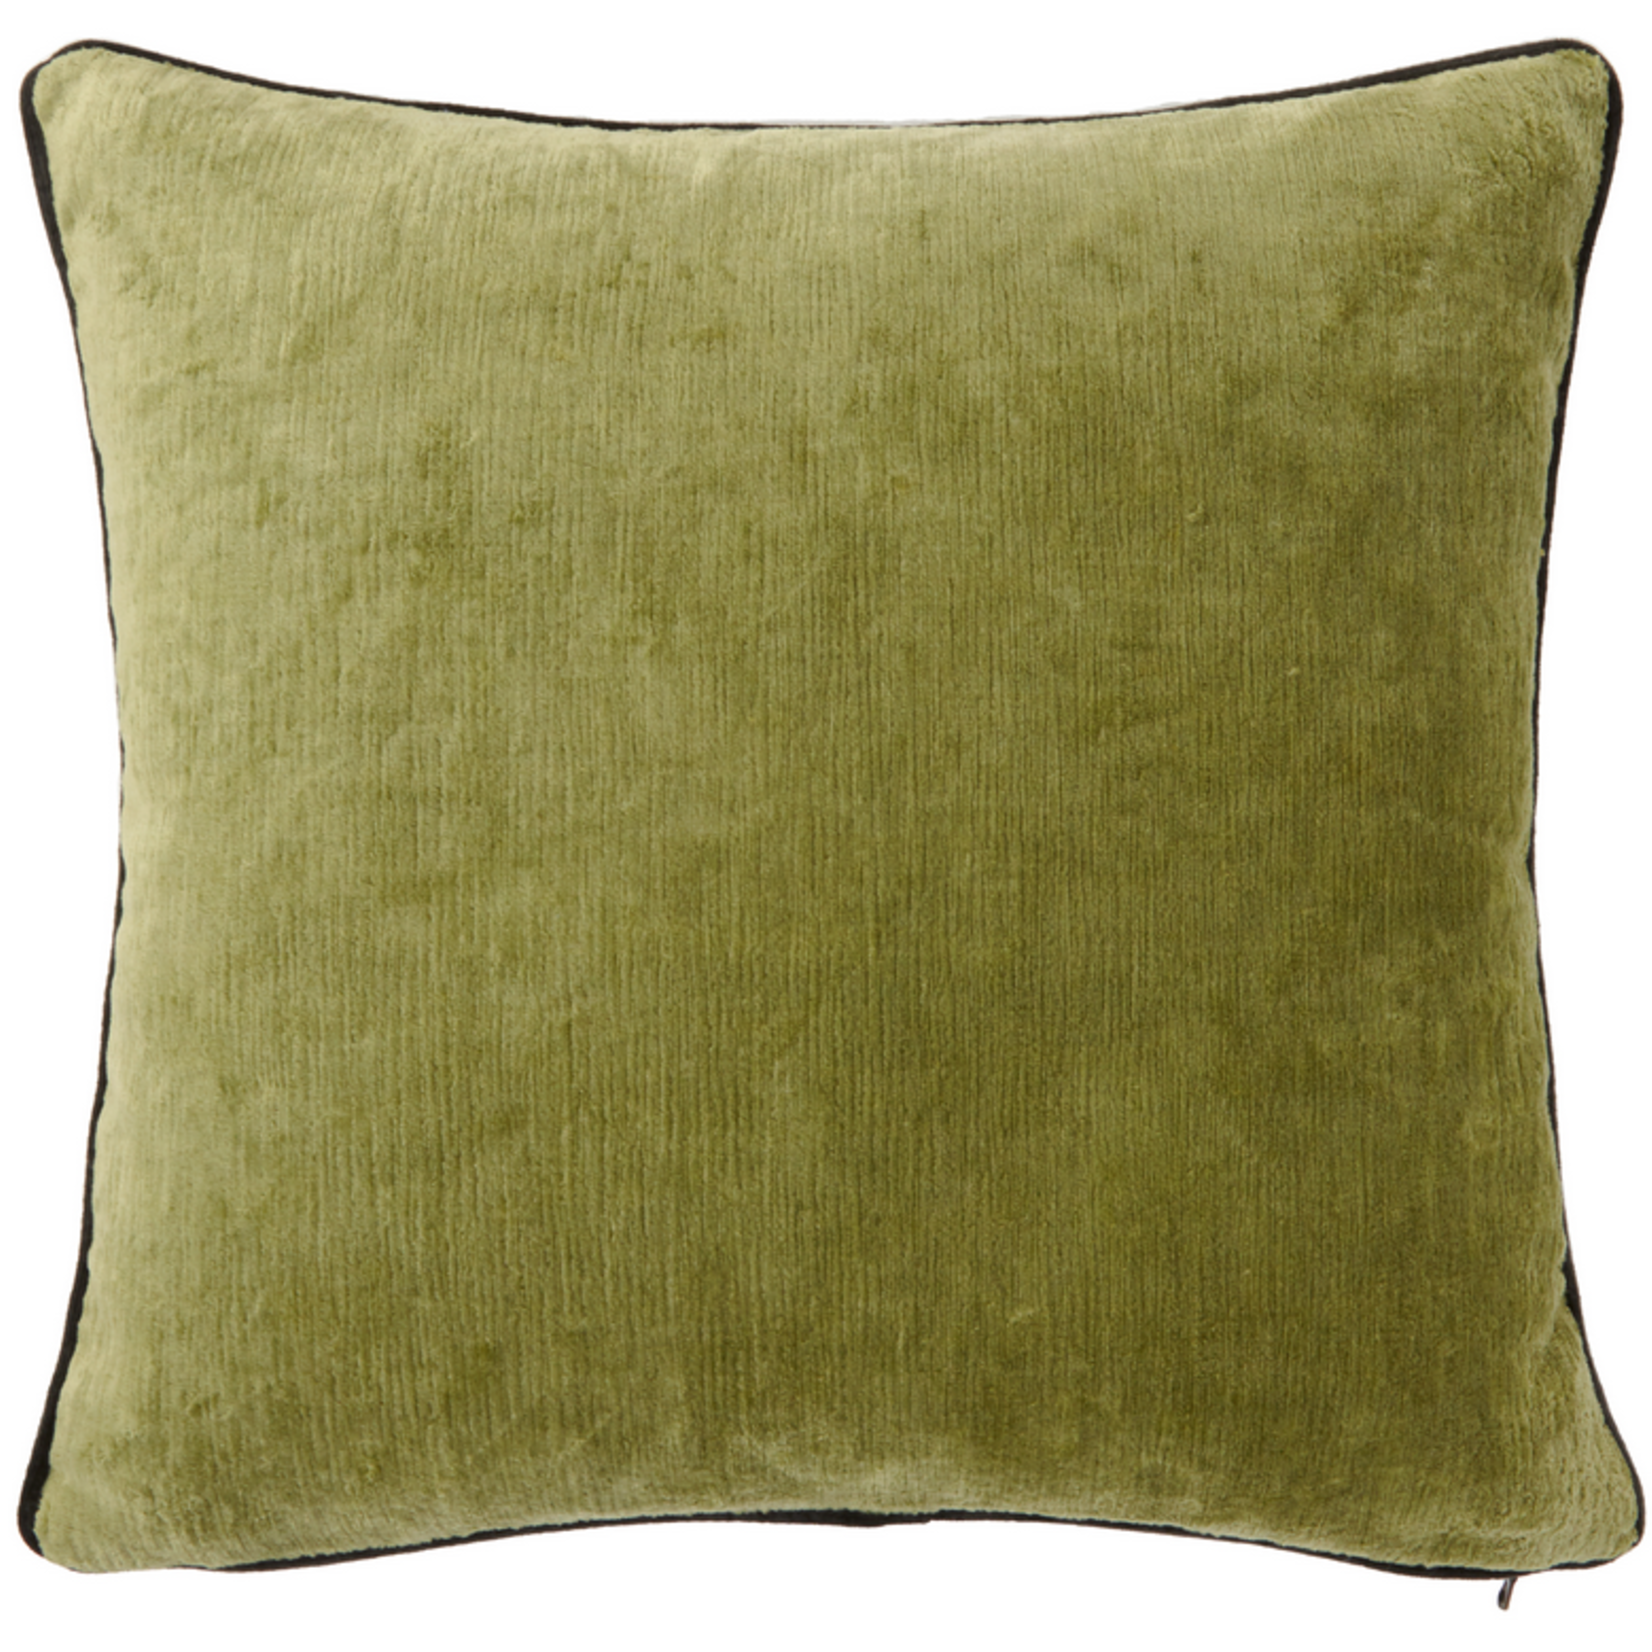 BOROMEE Decorative Pillow